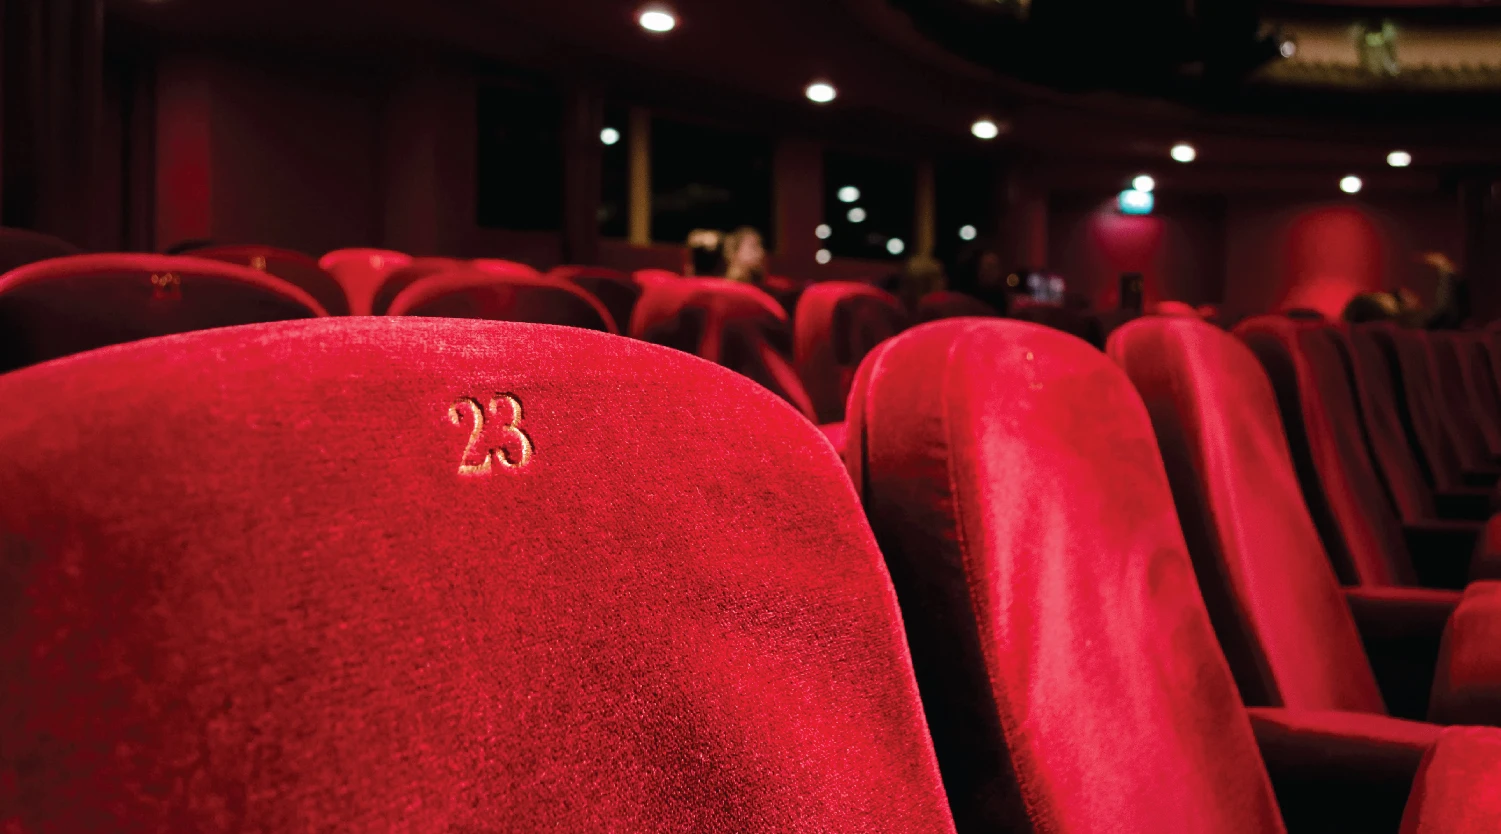 seats arranged in a cinema